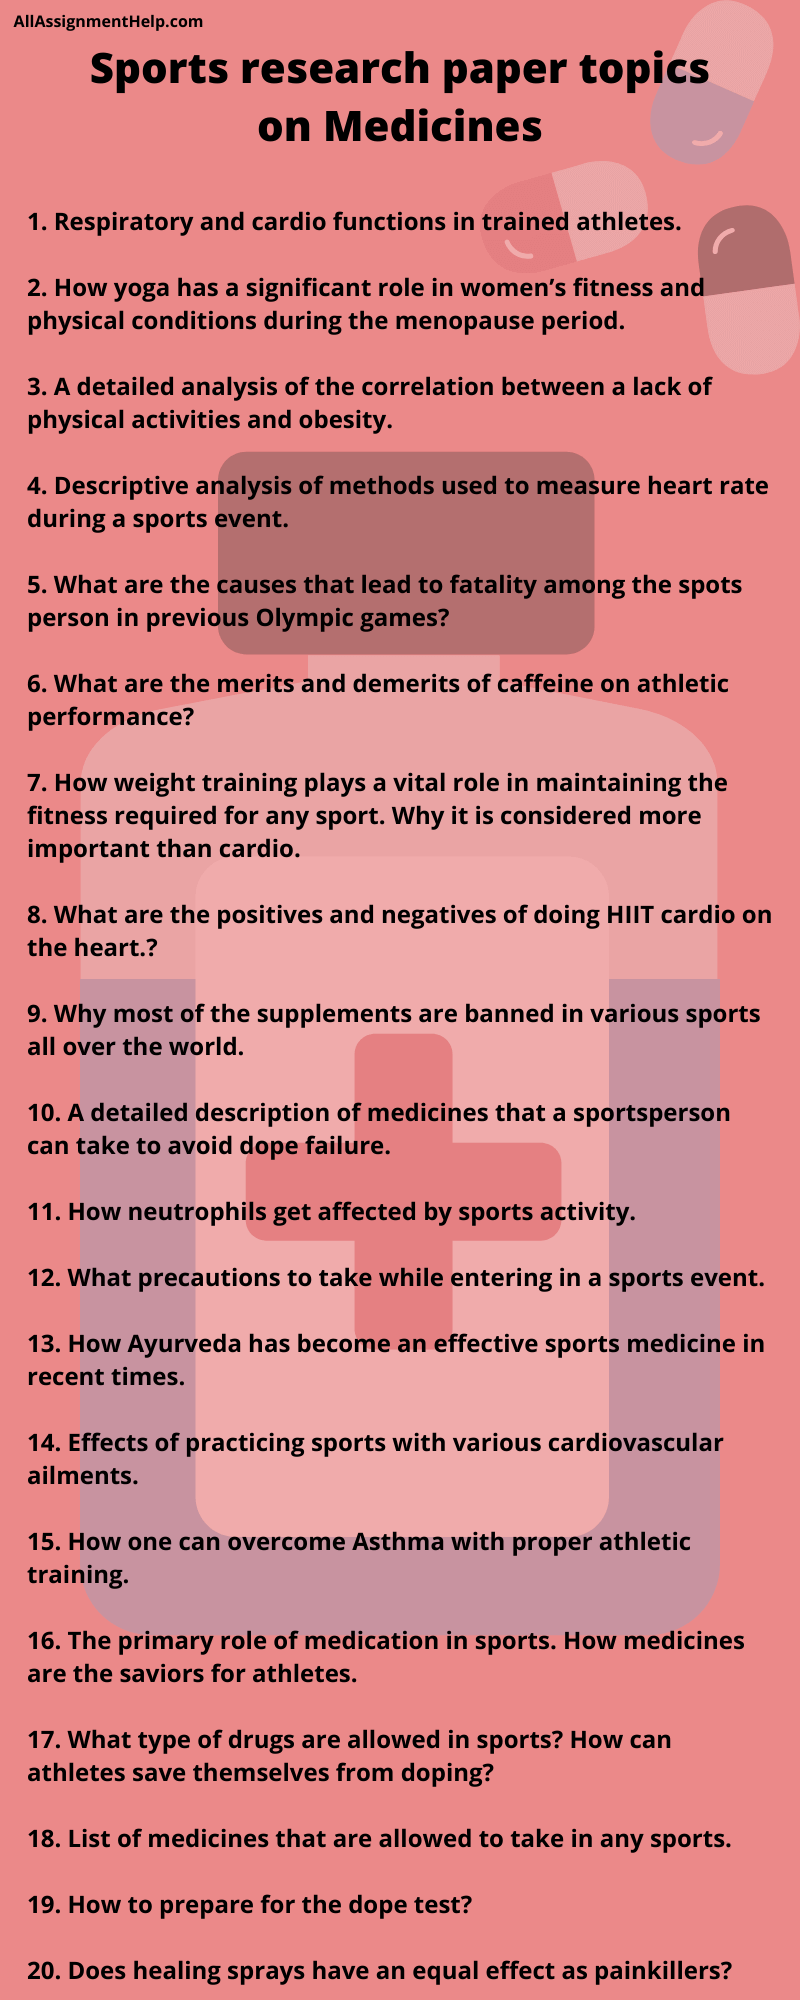 sports-research-paper-topics-medicine